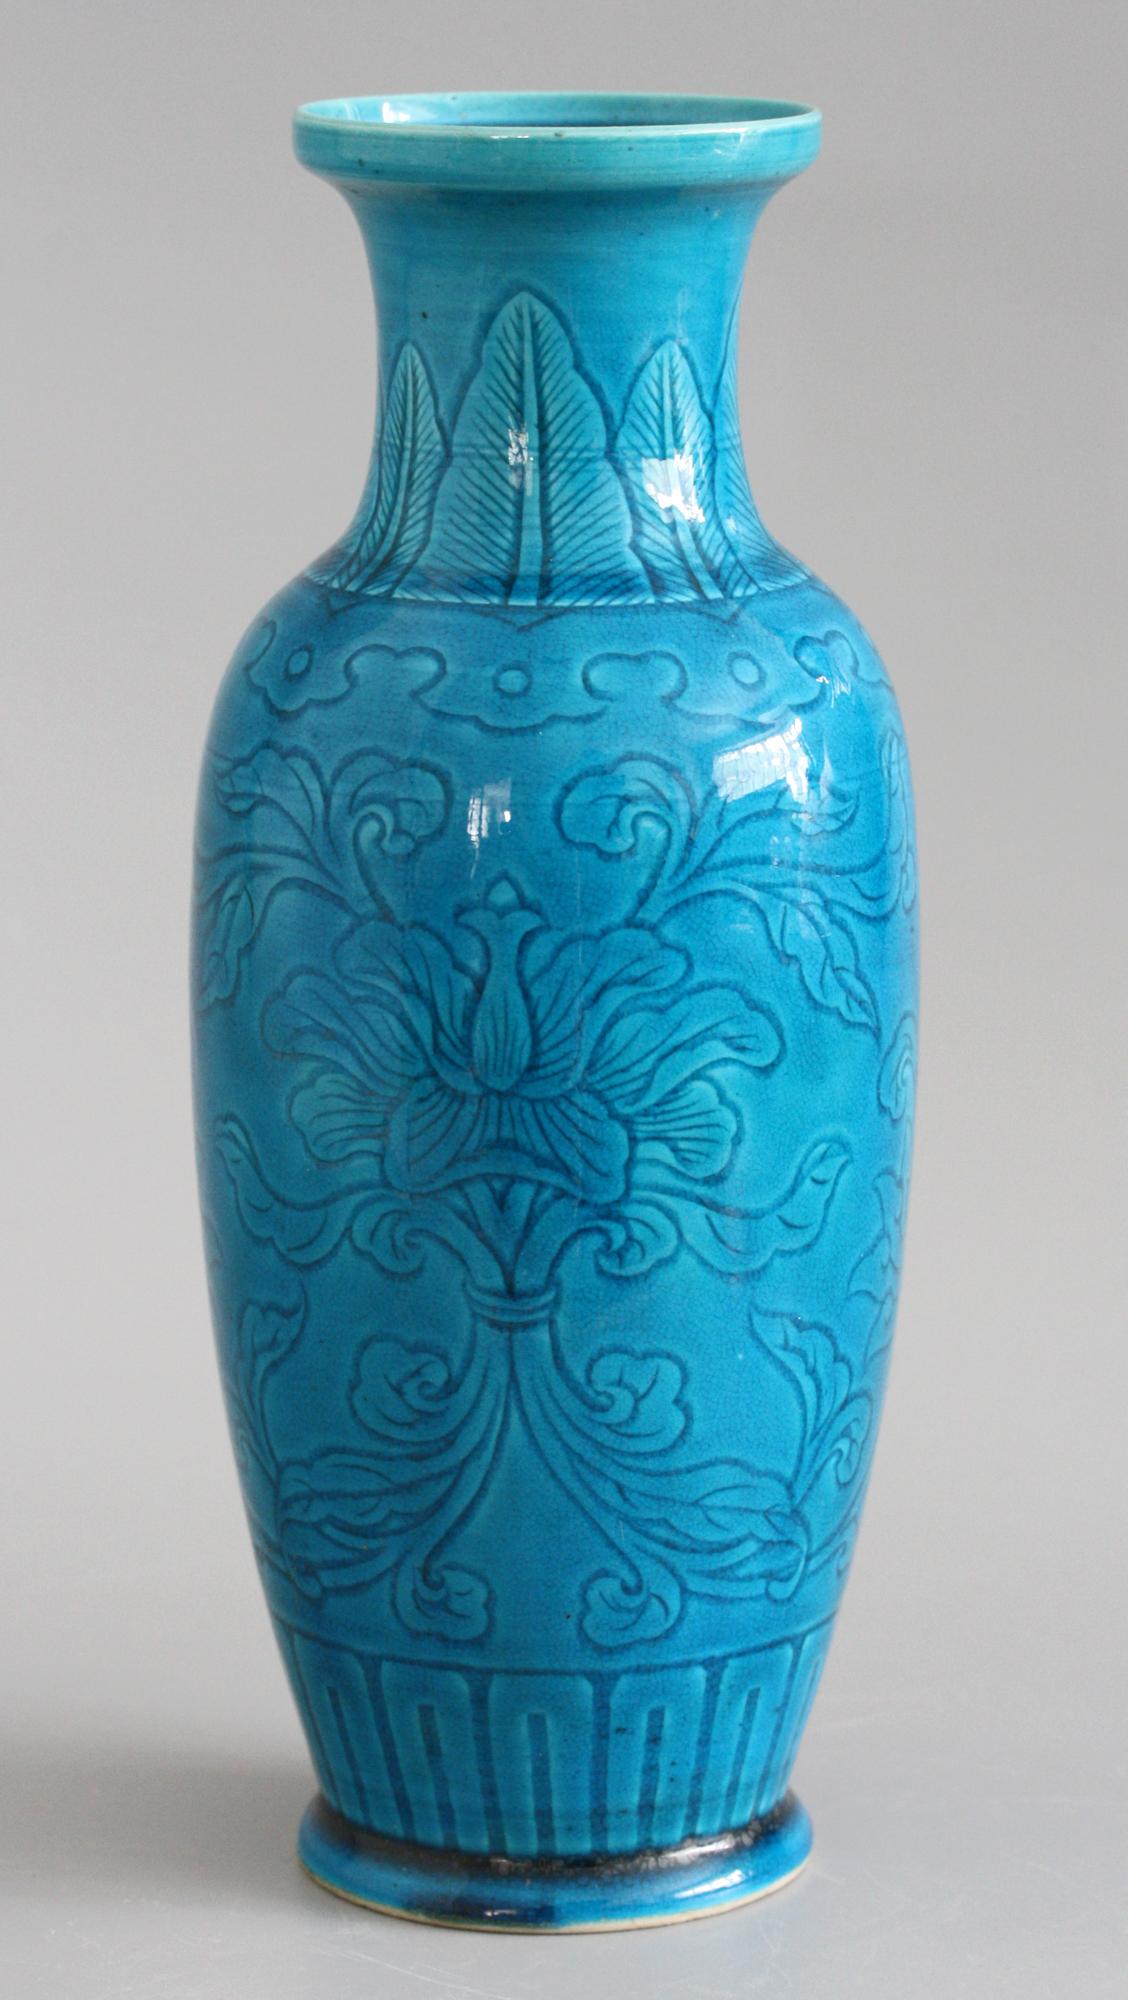 19th Century Chinese Turquoise Glazed Floral Rouleau Shape Vase with Zhuanshu Script Mark